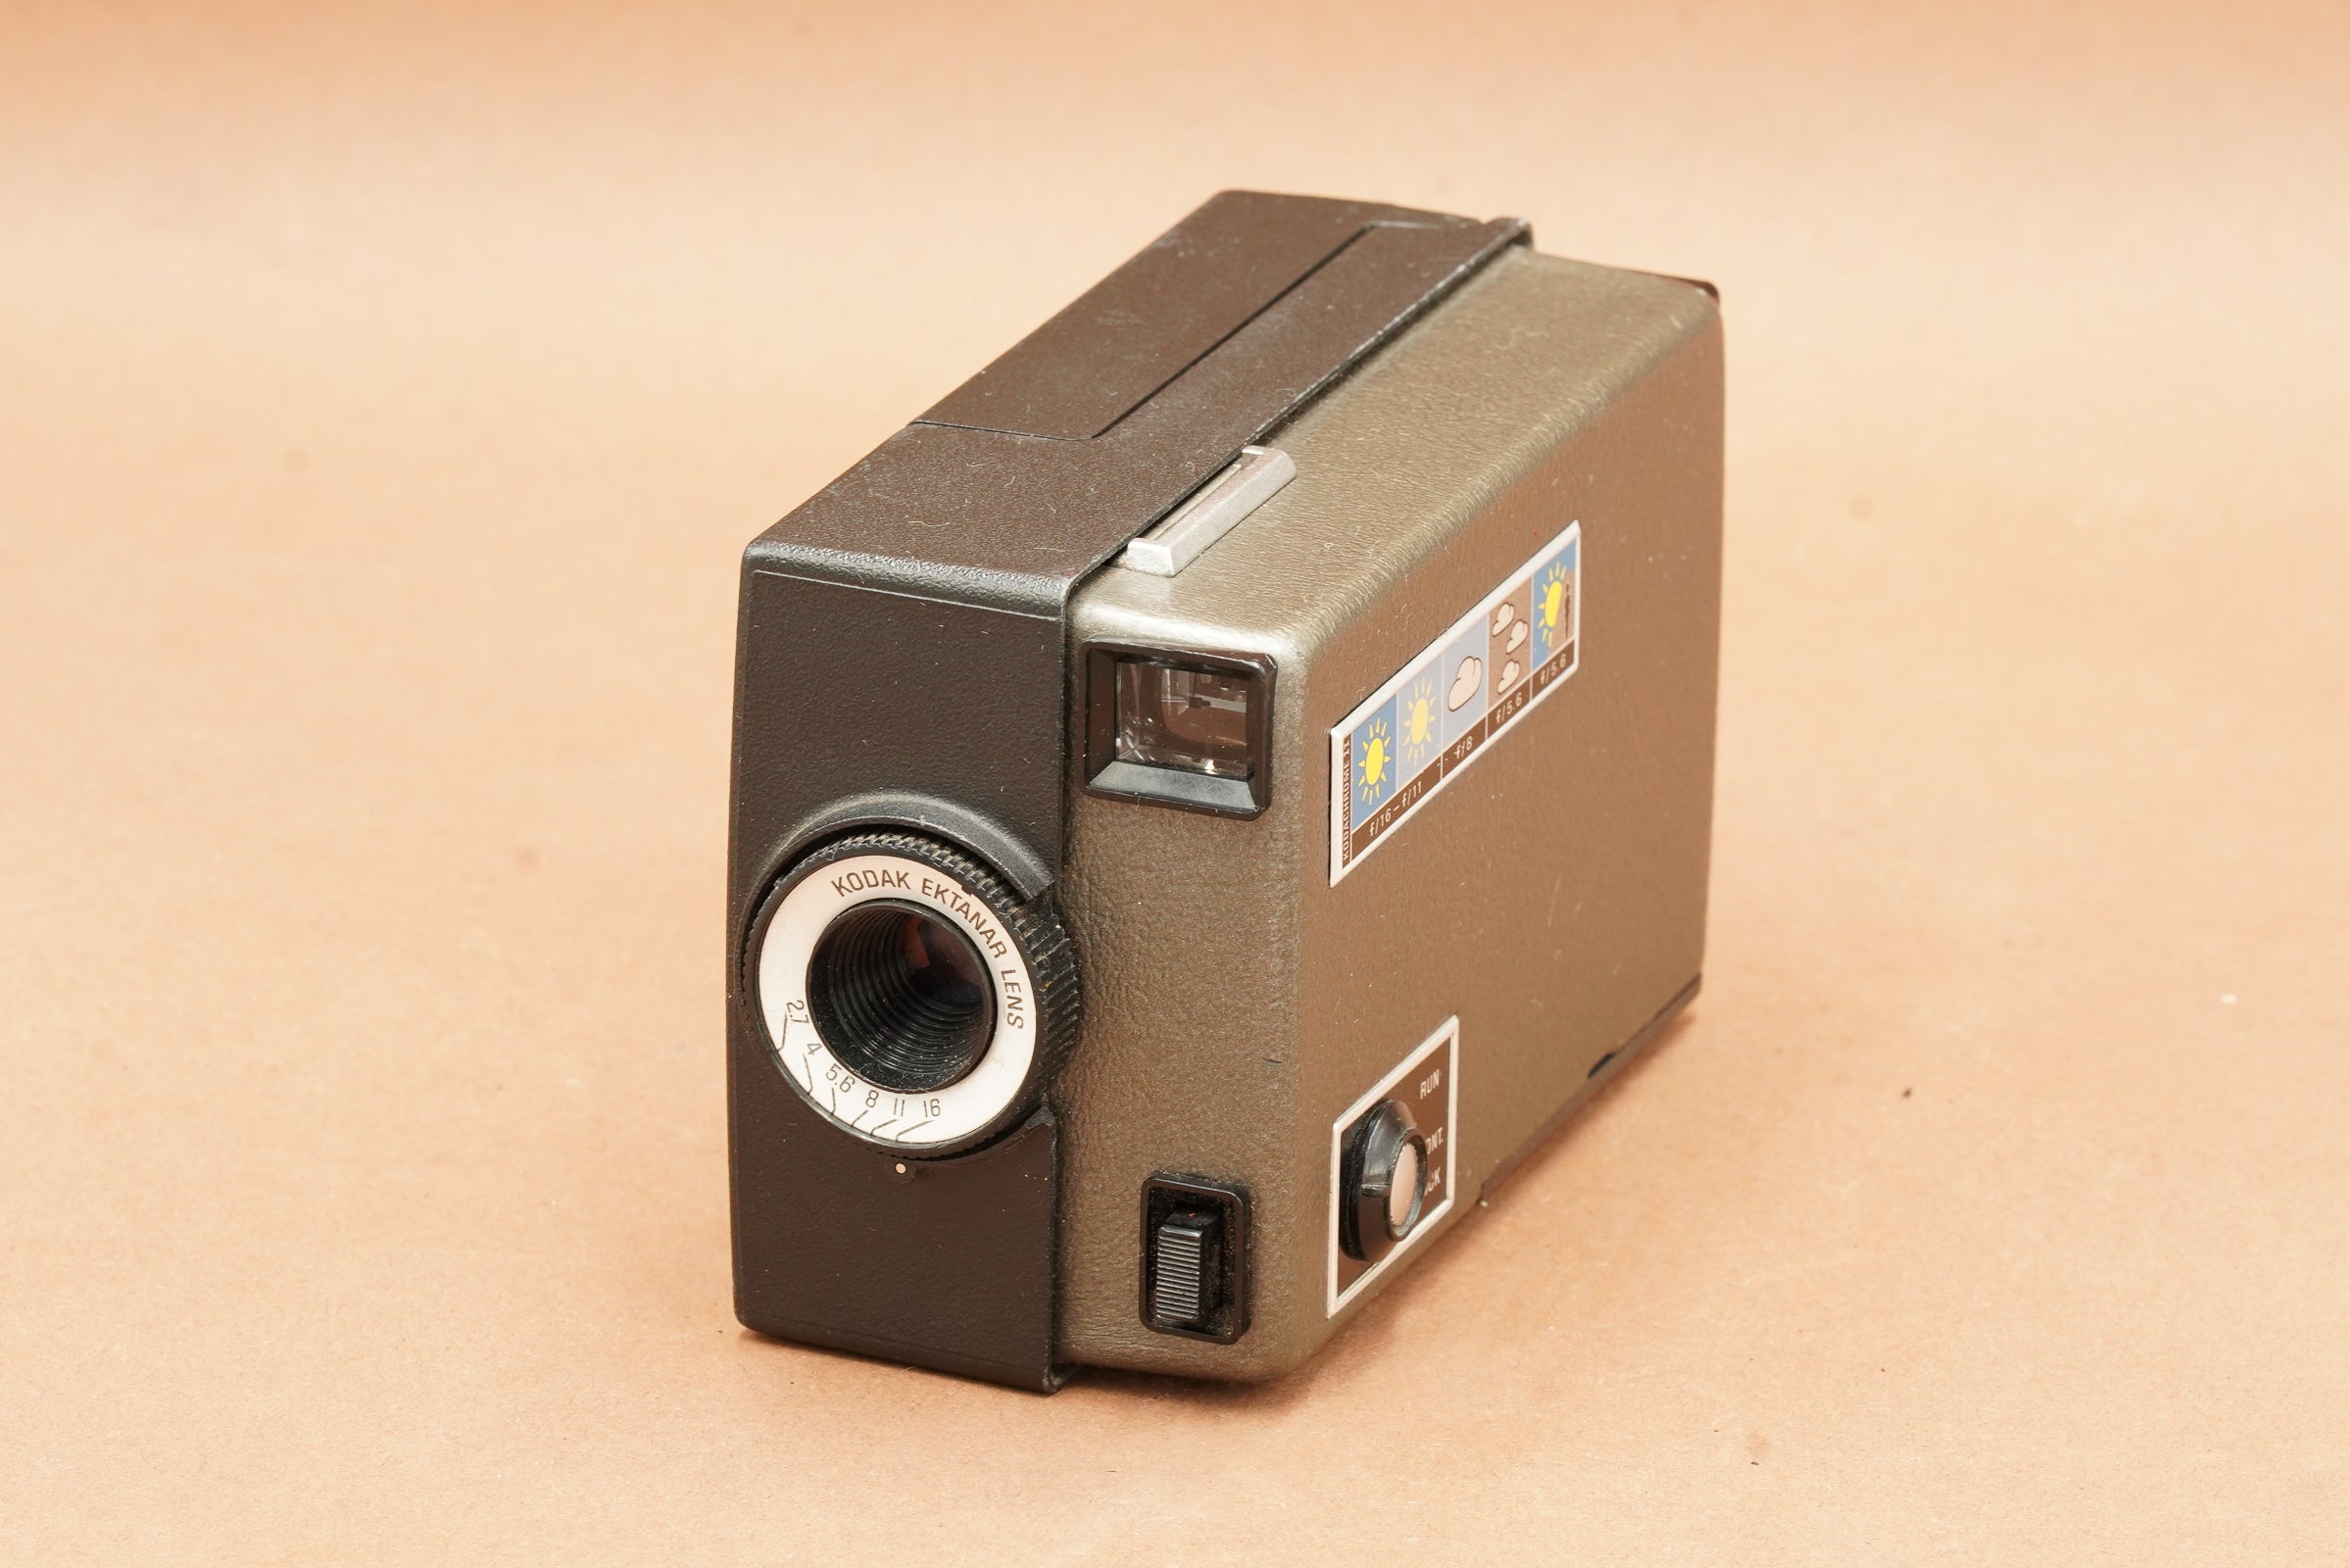 ON SALE ! KODAK Instamatic M12 film camera for DISPLAY/PROP